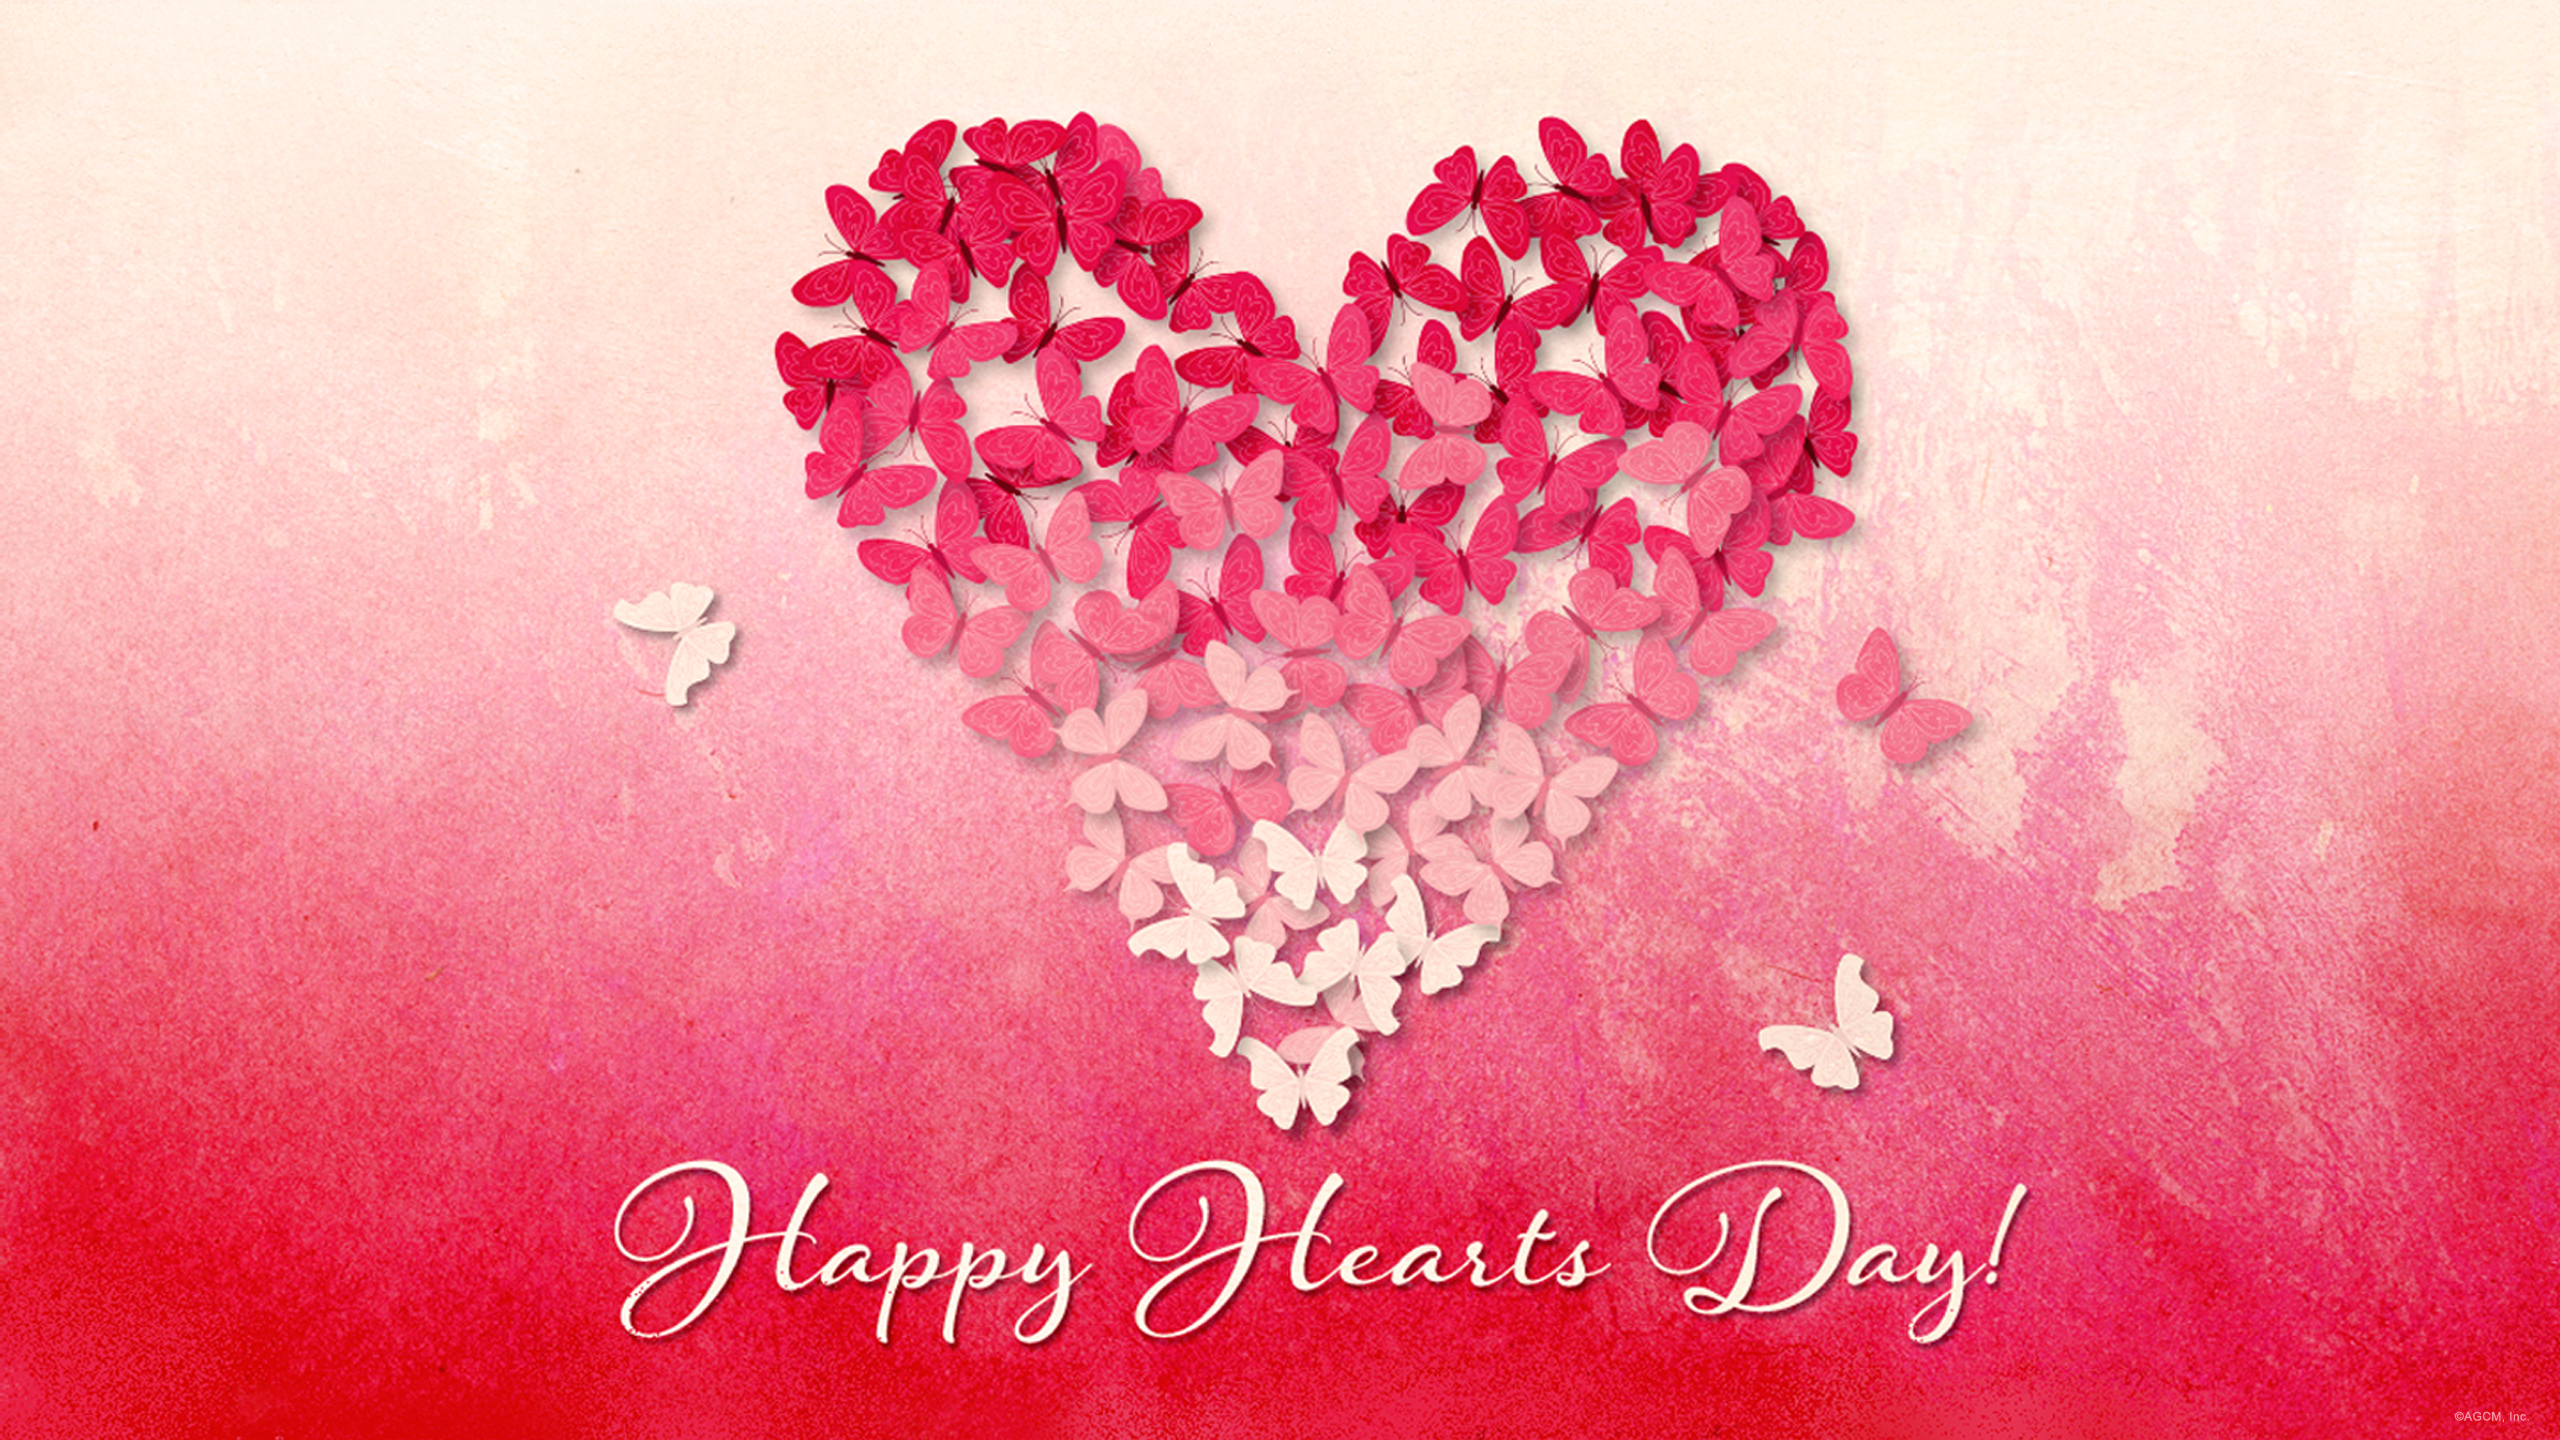 valentines day wallpaper,heart,pink,love,red,valentine's day